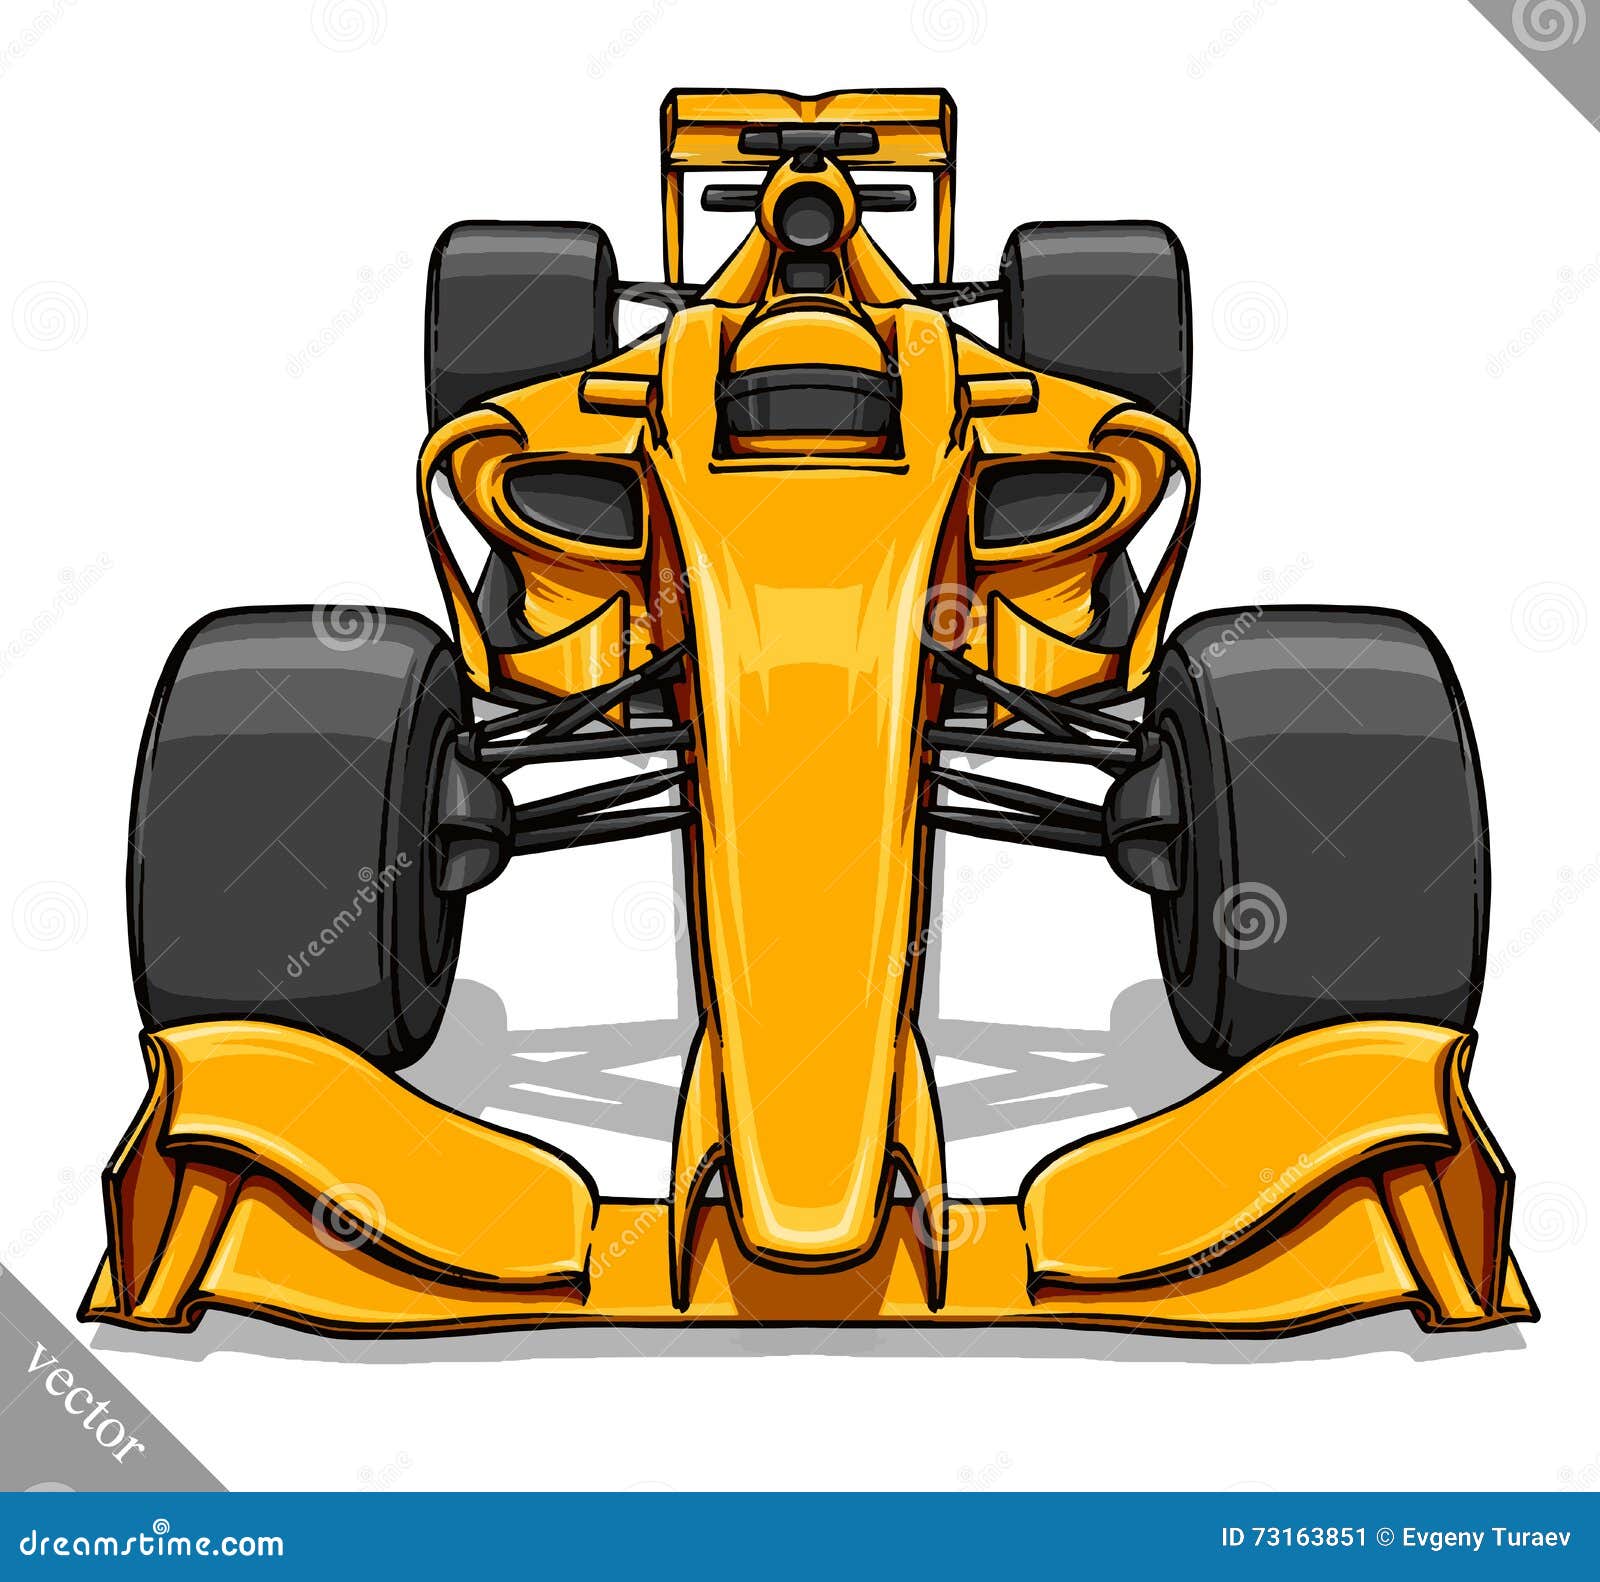 Desenho animado europeu de corridas de carros esportivos · Creative Fabrica